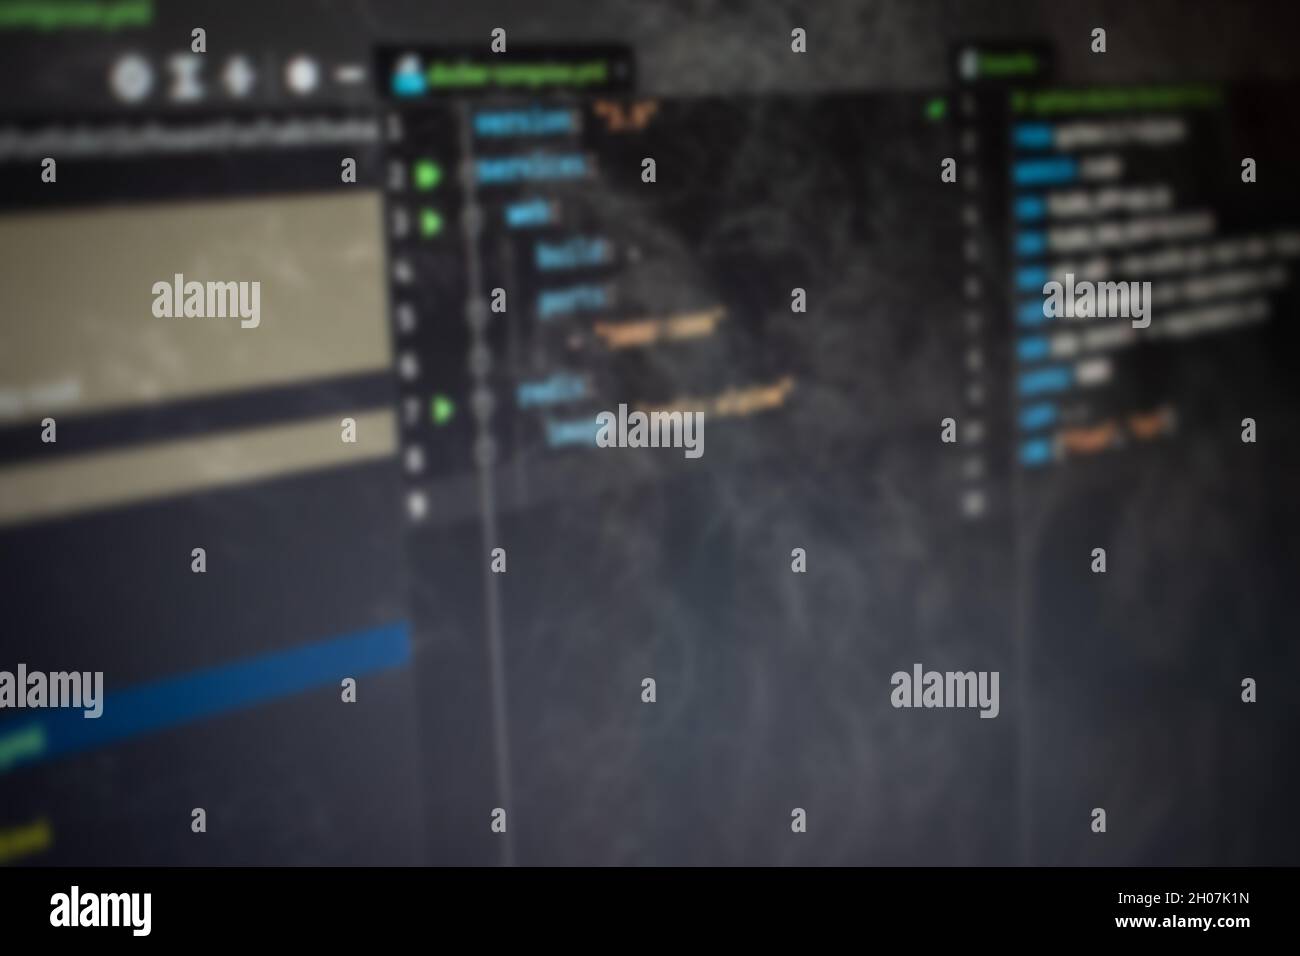 Docker compose Hello World code on screen blurry background image Stock Photo